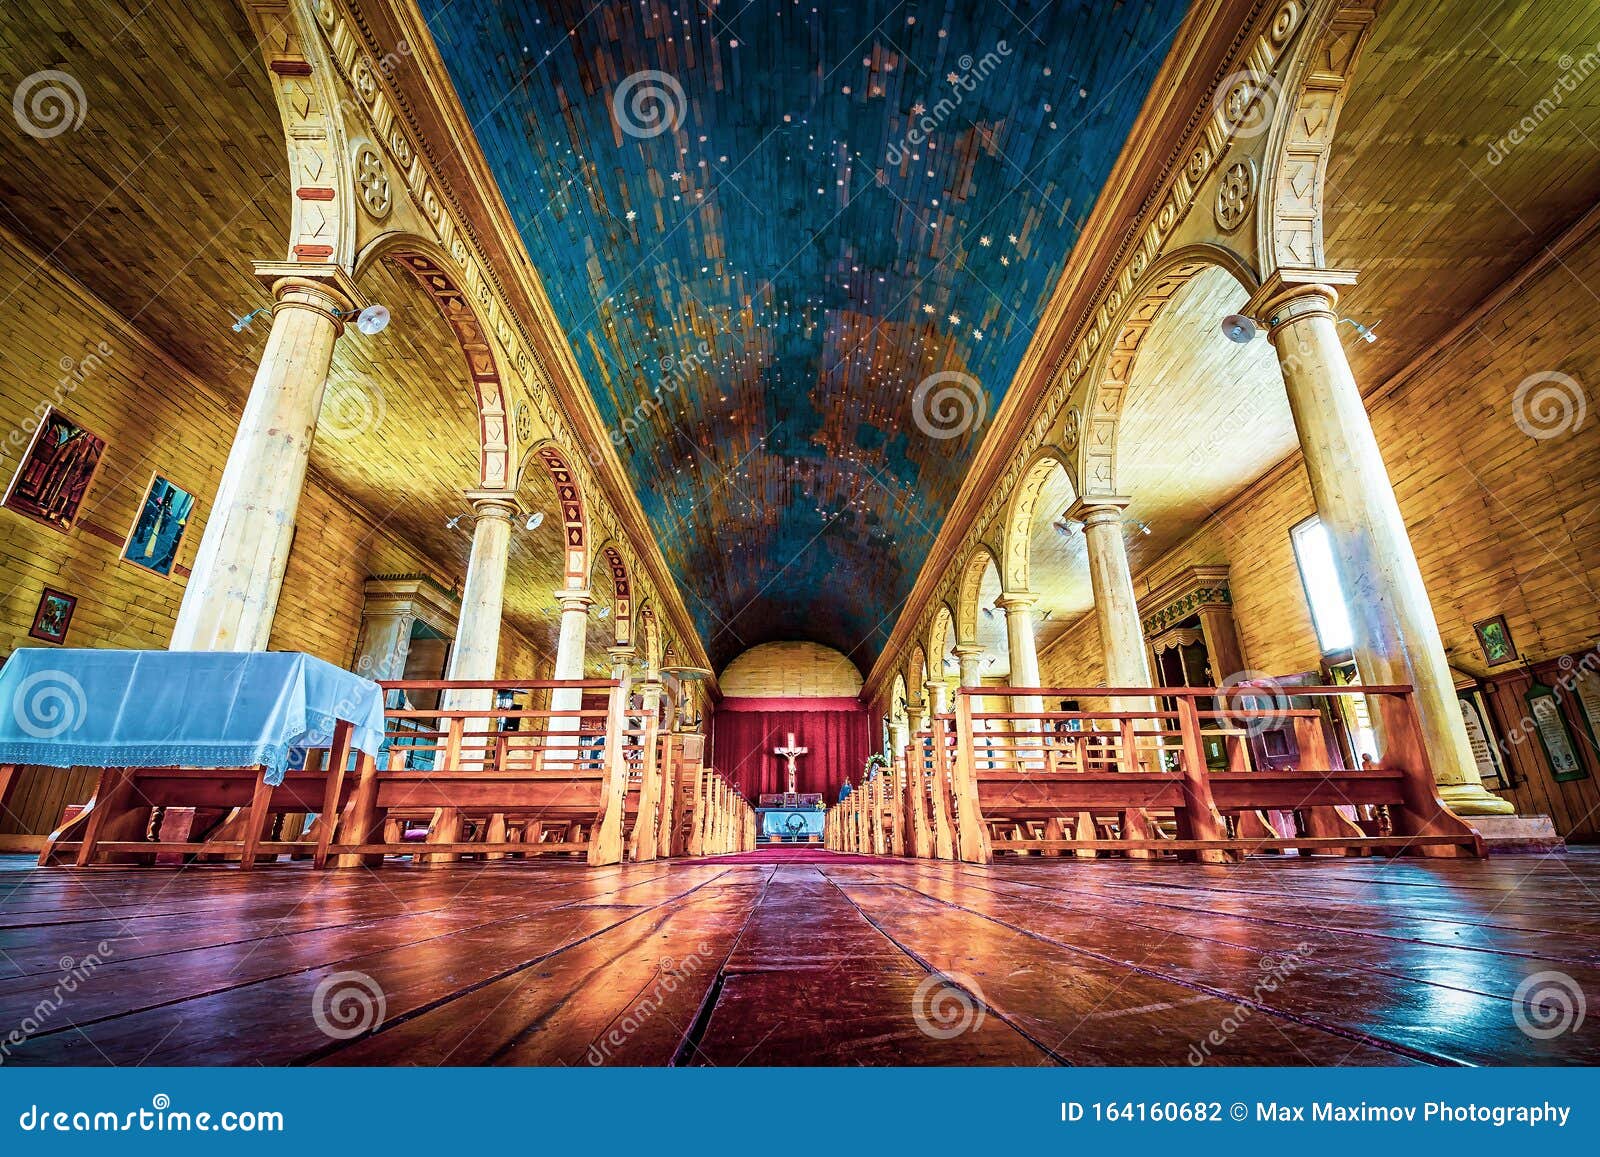 chonchi, chiloe island, chile - inside the wooden jesuit church in chonchi